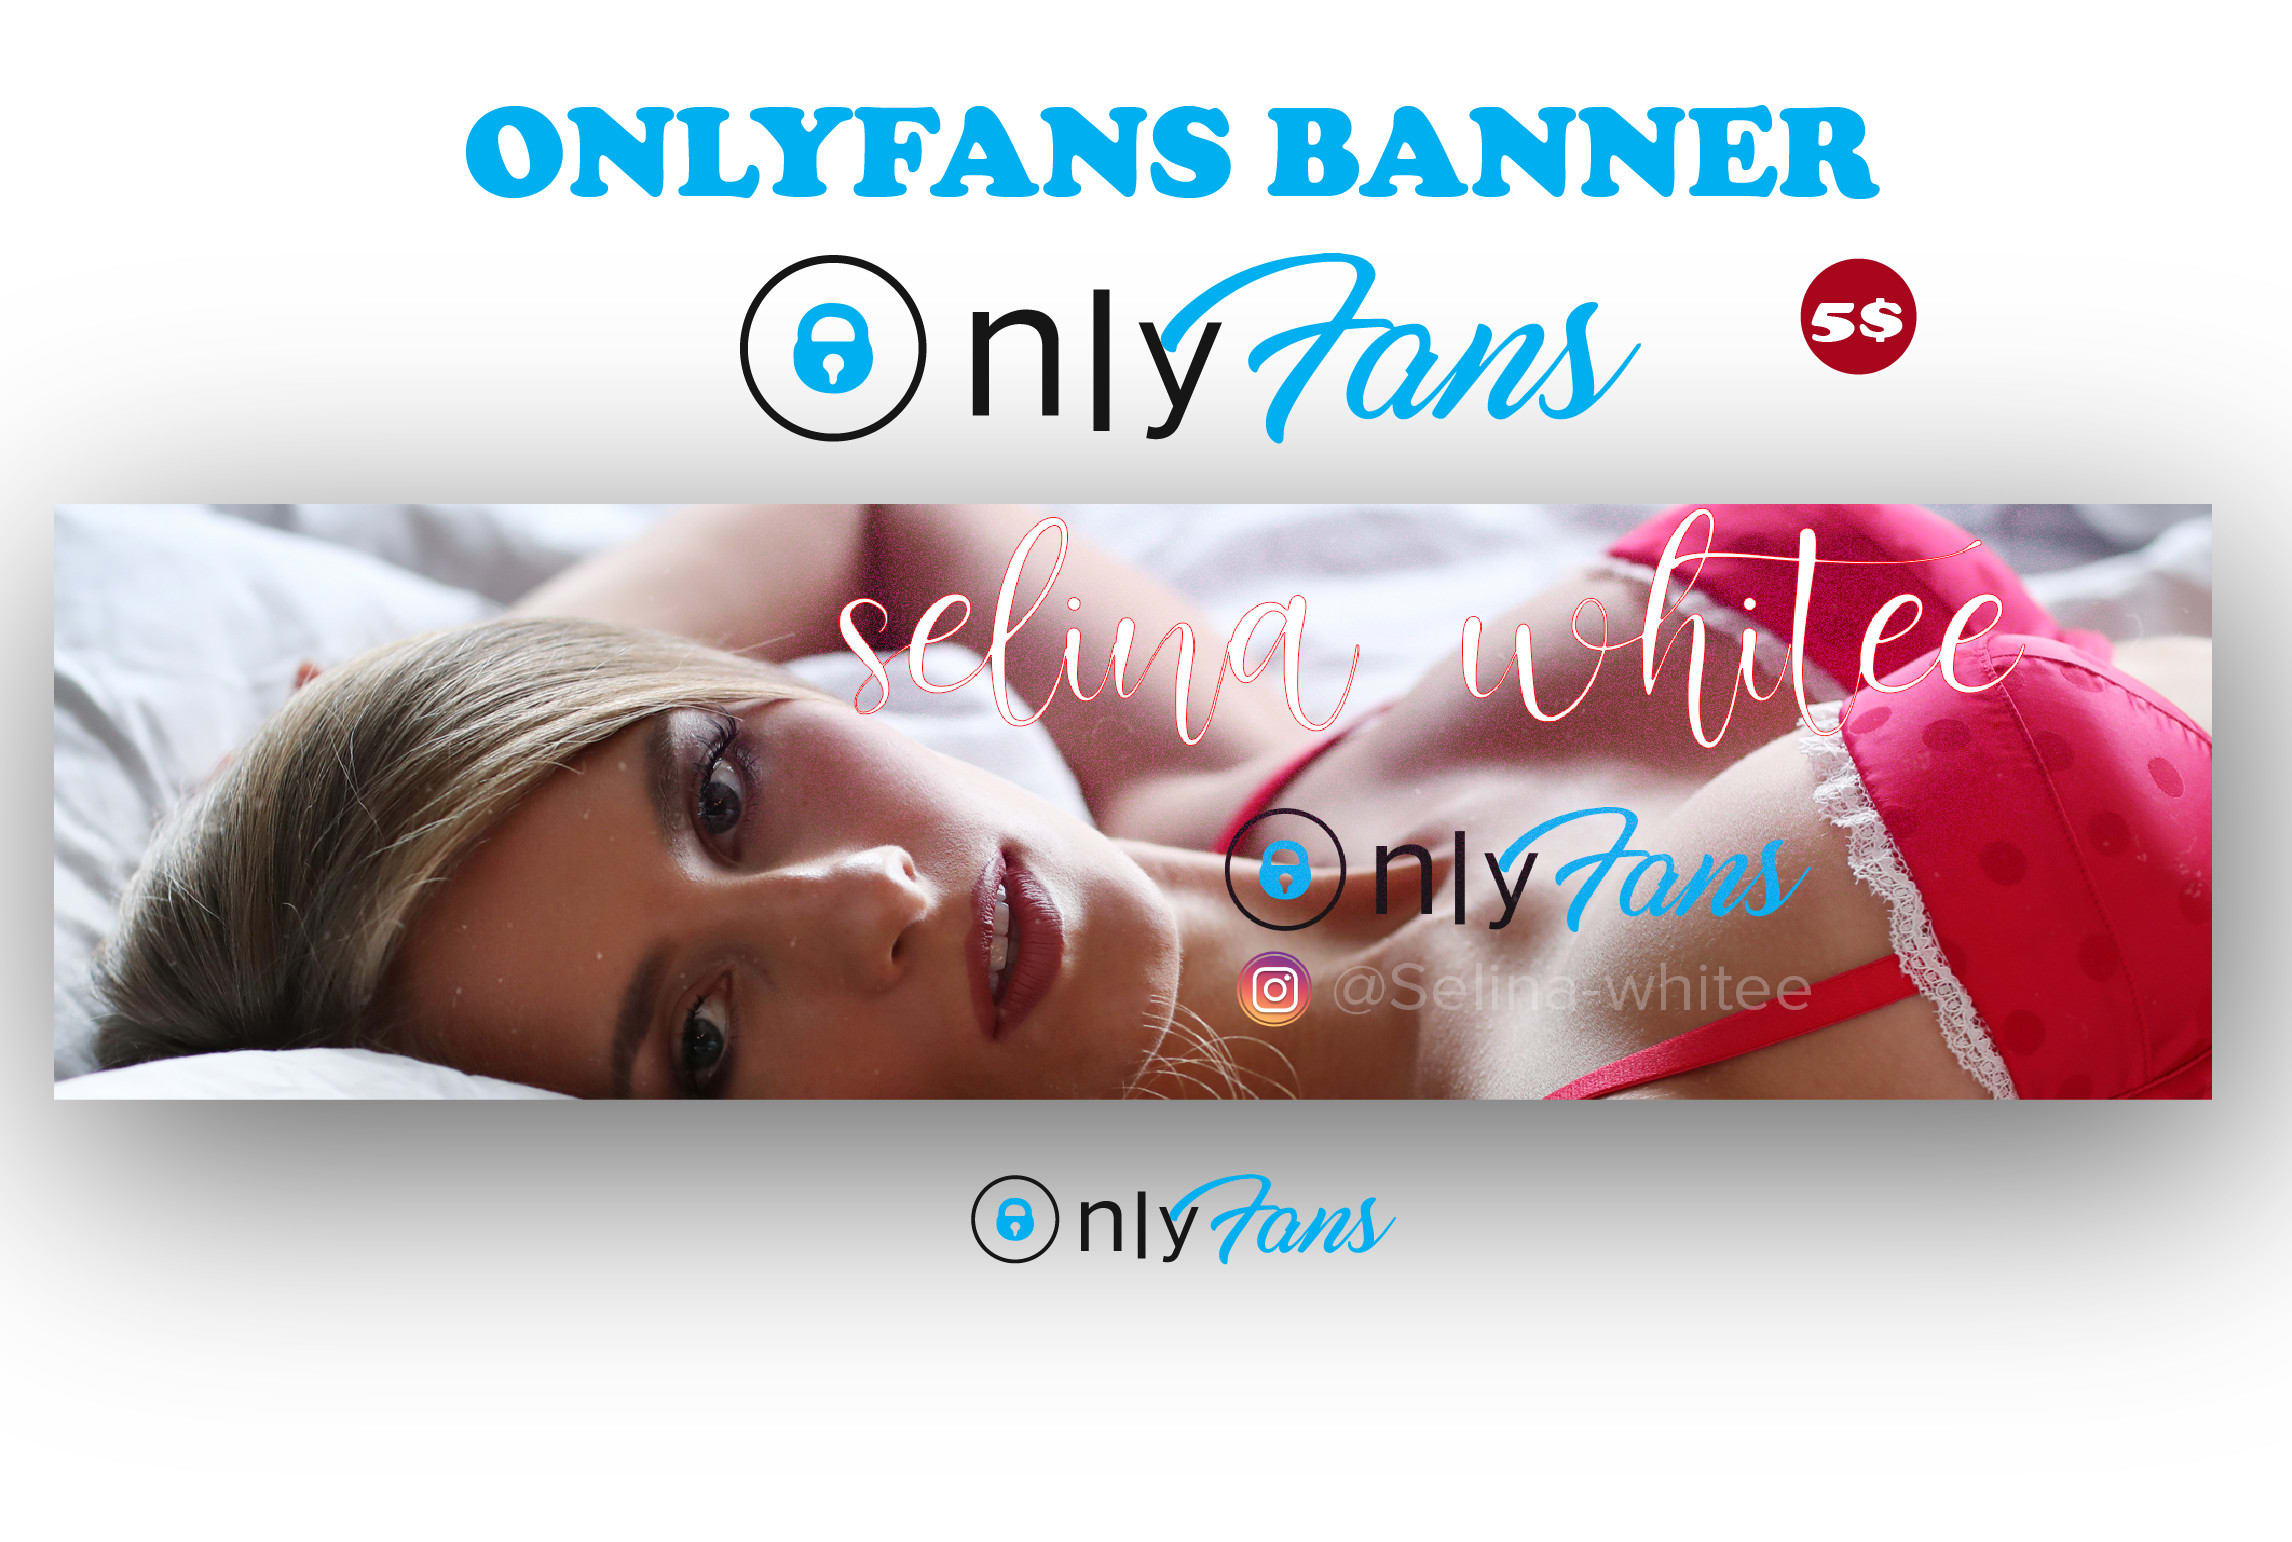 Onlyfans banner size